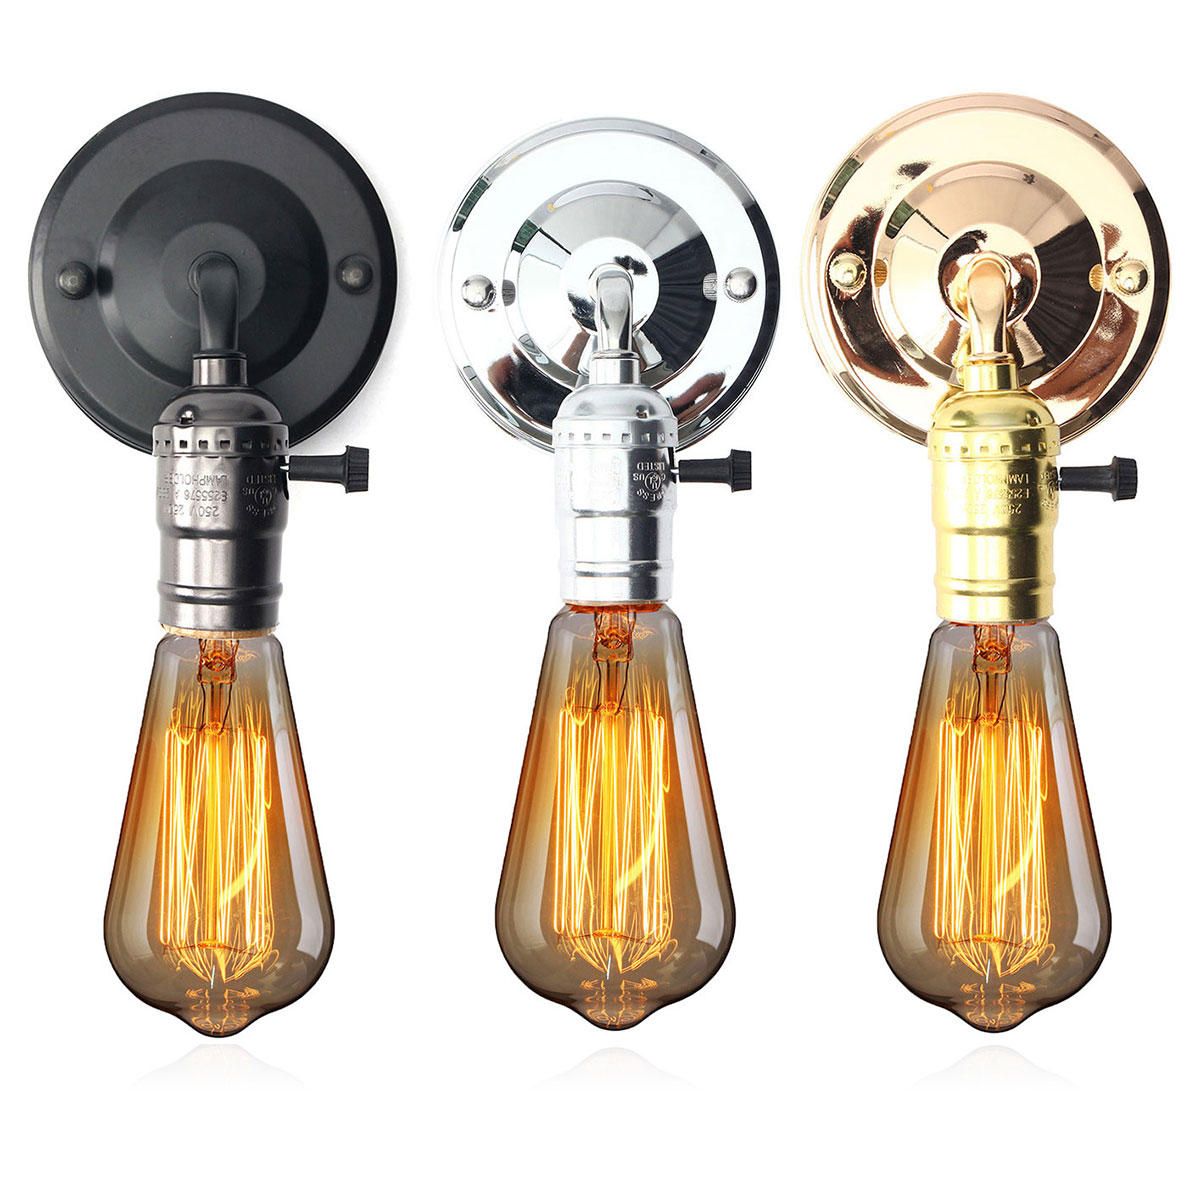 E27 Antieke Vintage Schakelaar Type Wall Light Sconce Lamp Bulb Socket Holder Fixture